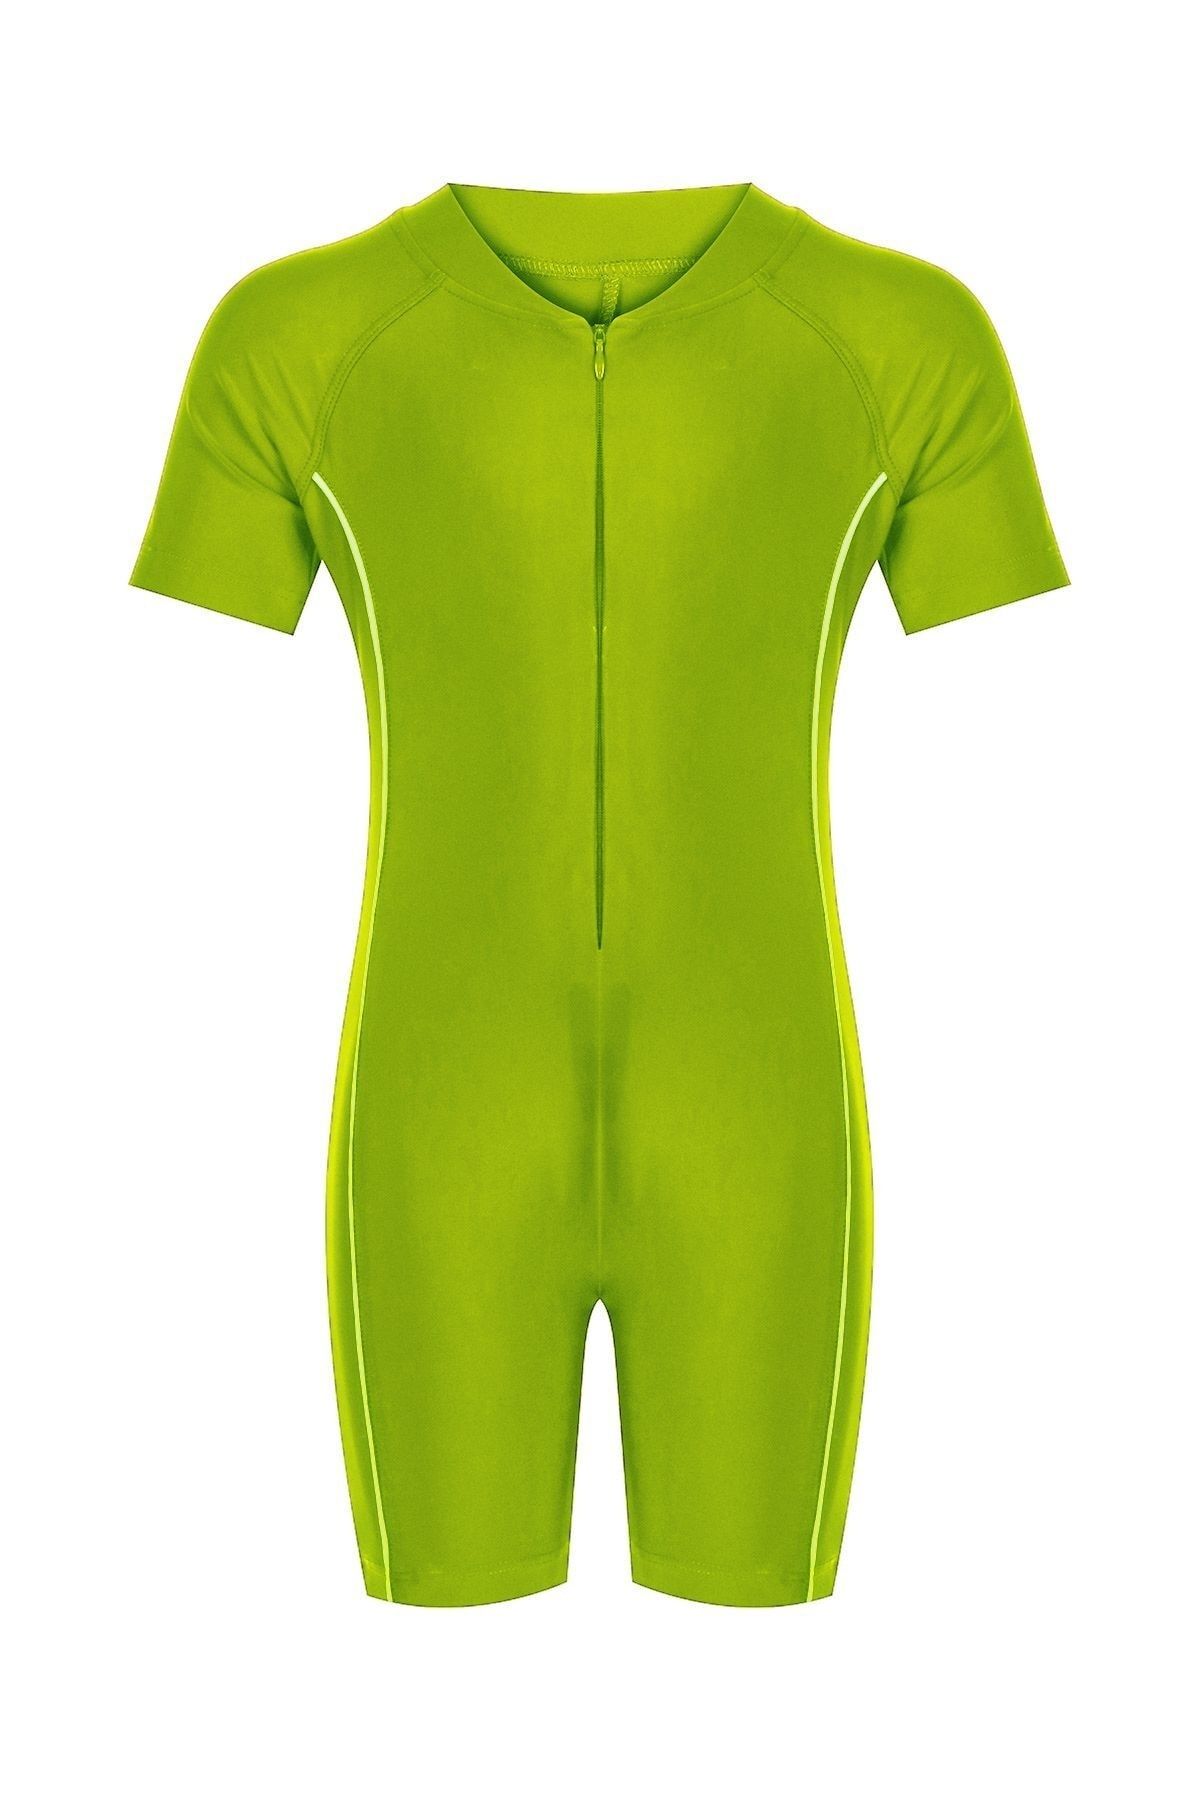 Remsa Mayo Tulum Kısa Kollu Şortlu Çocuk Yüzücü Mayo Clous 5155 Neon Yeşili